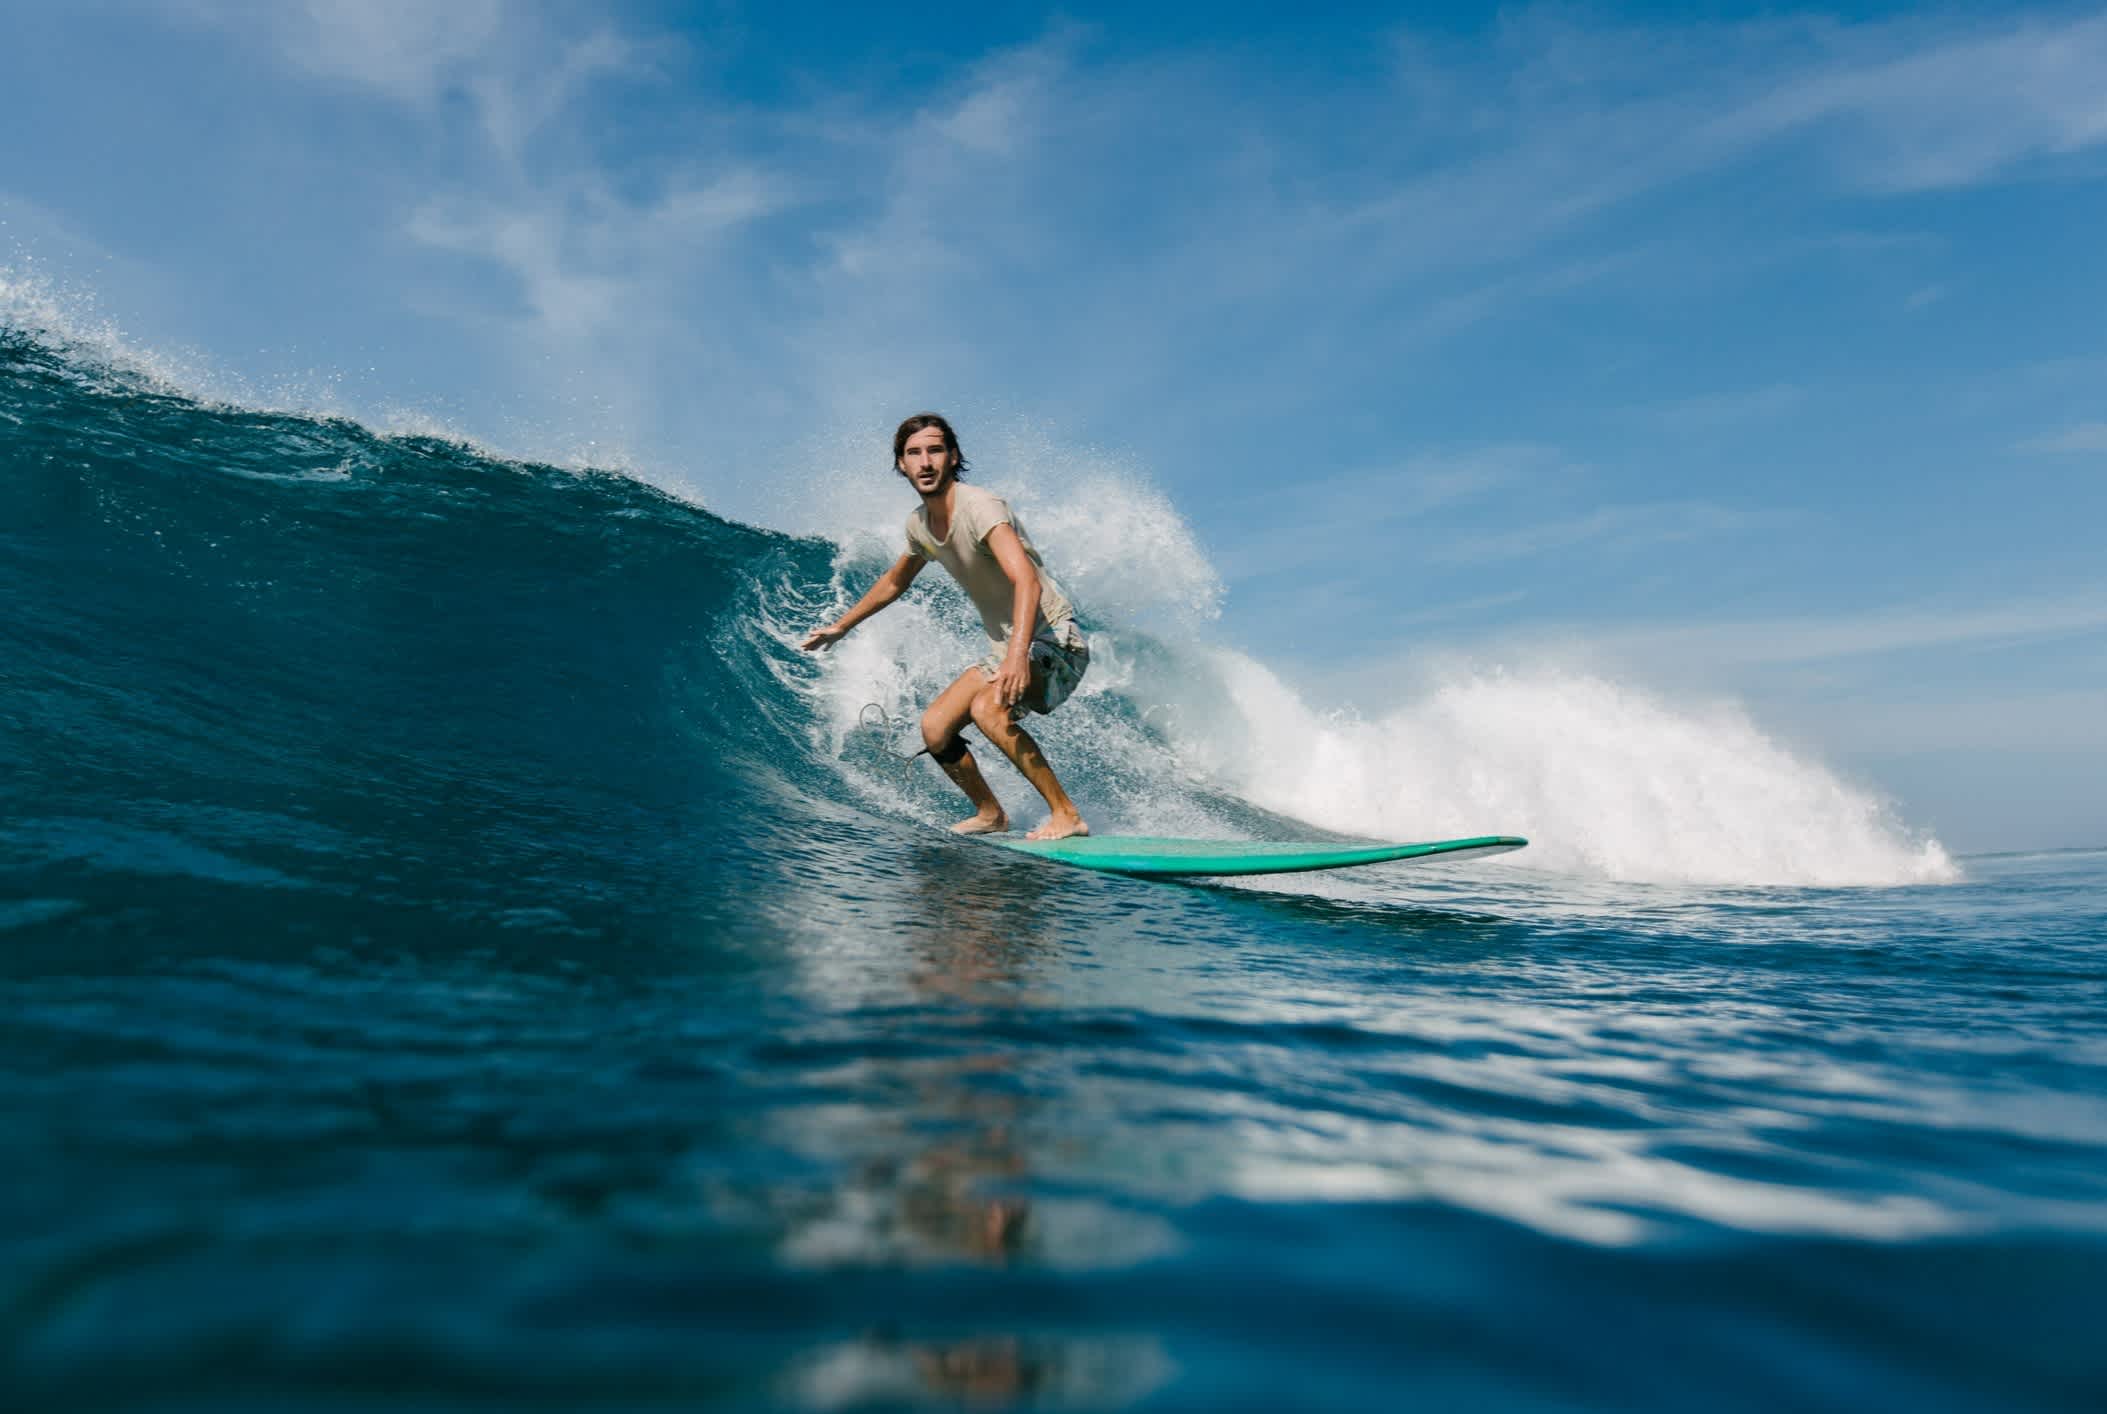  Junger Mann auf Surfbrett an sonnigen Tag